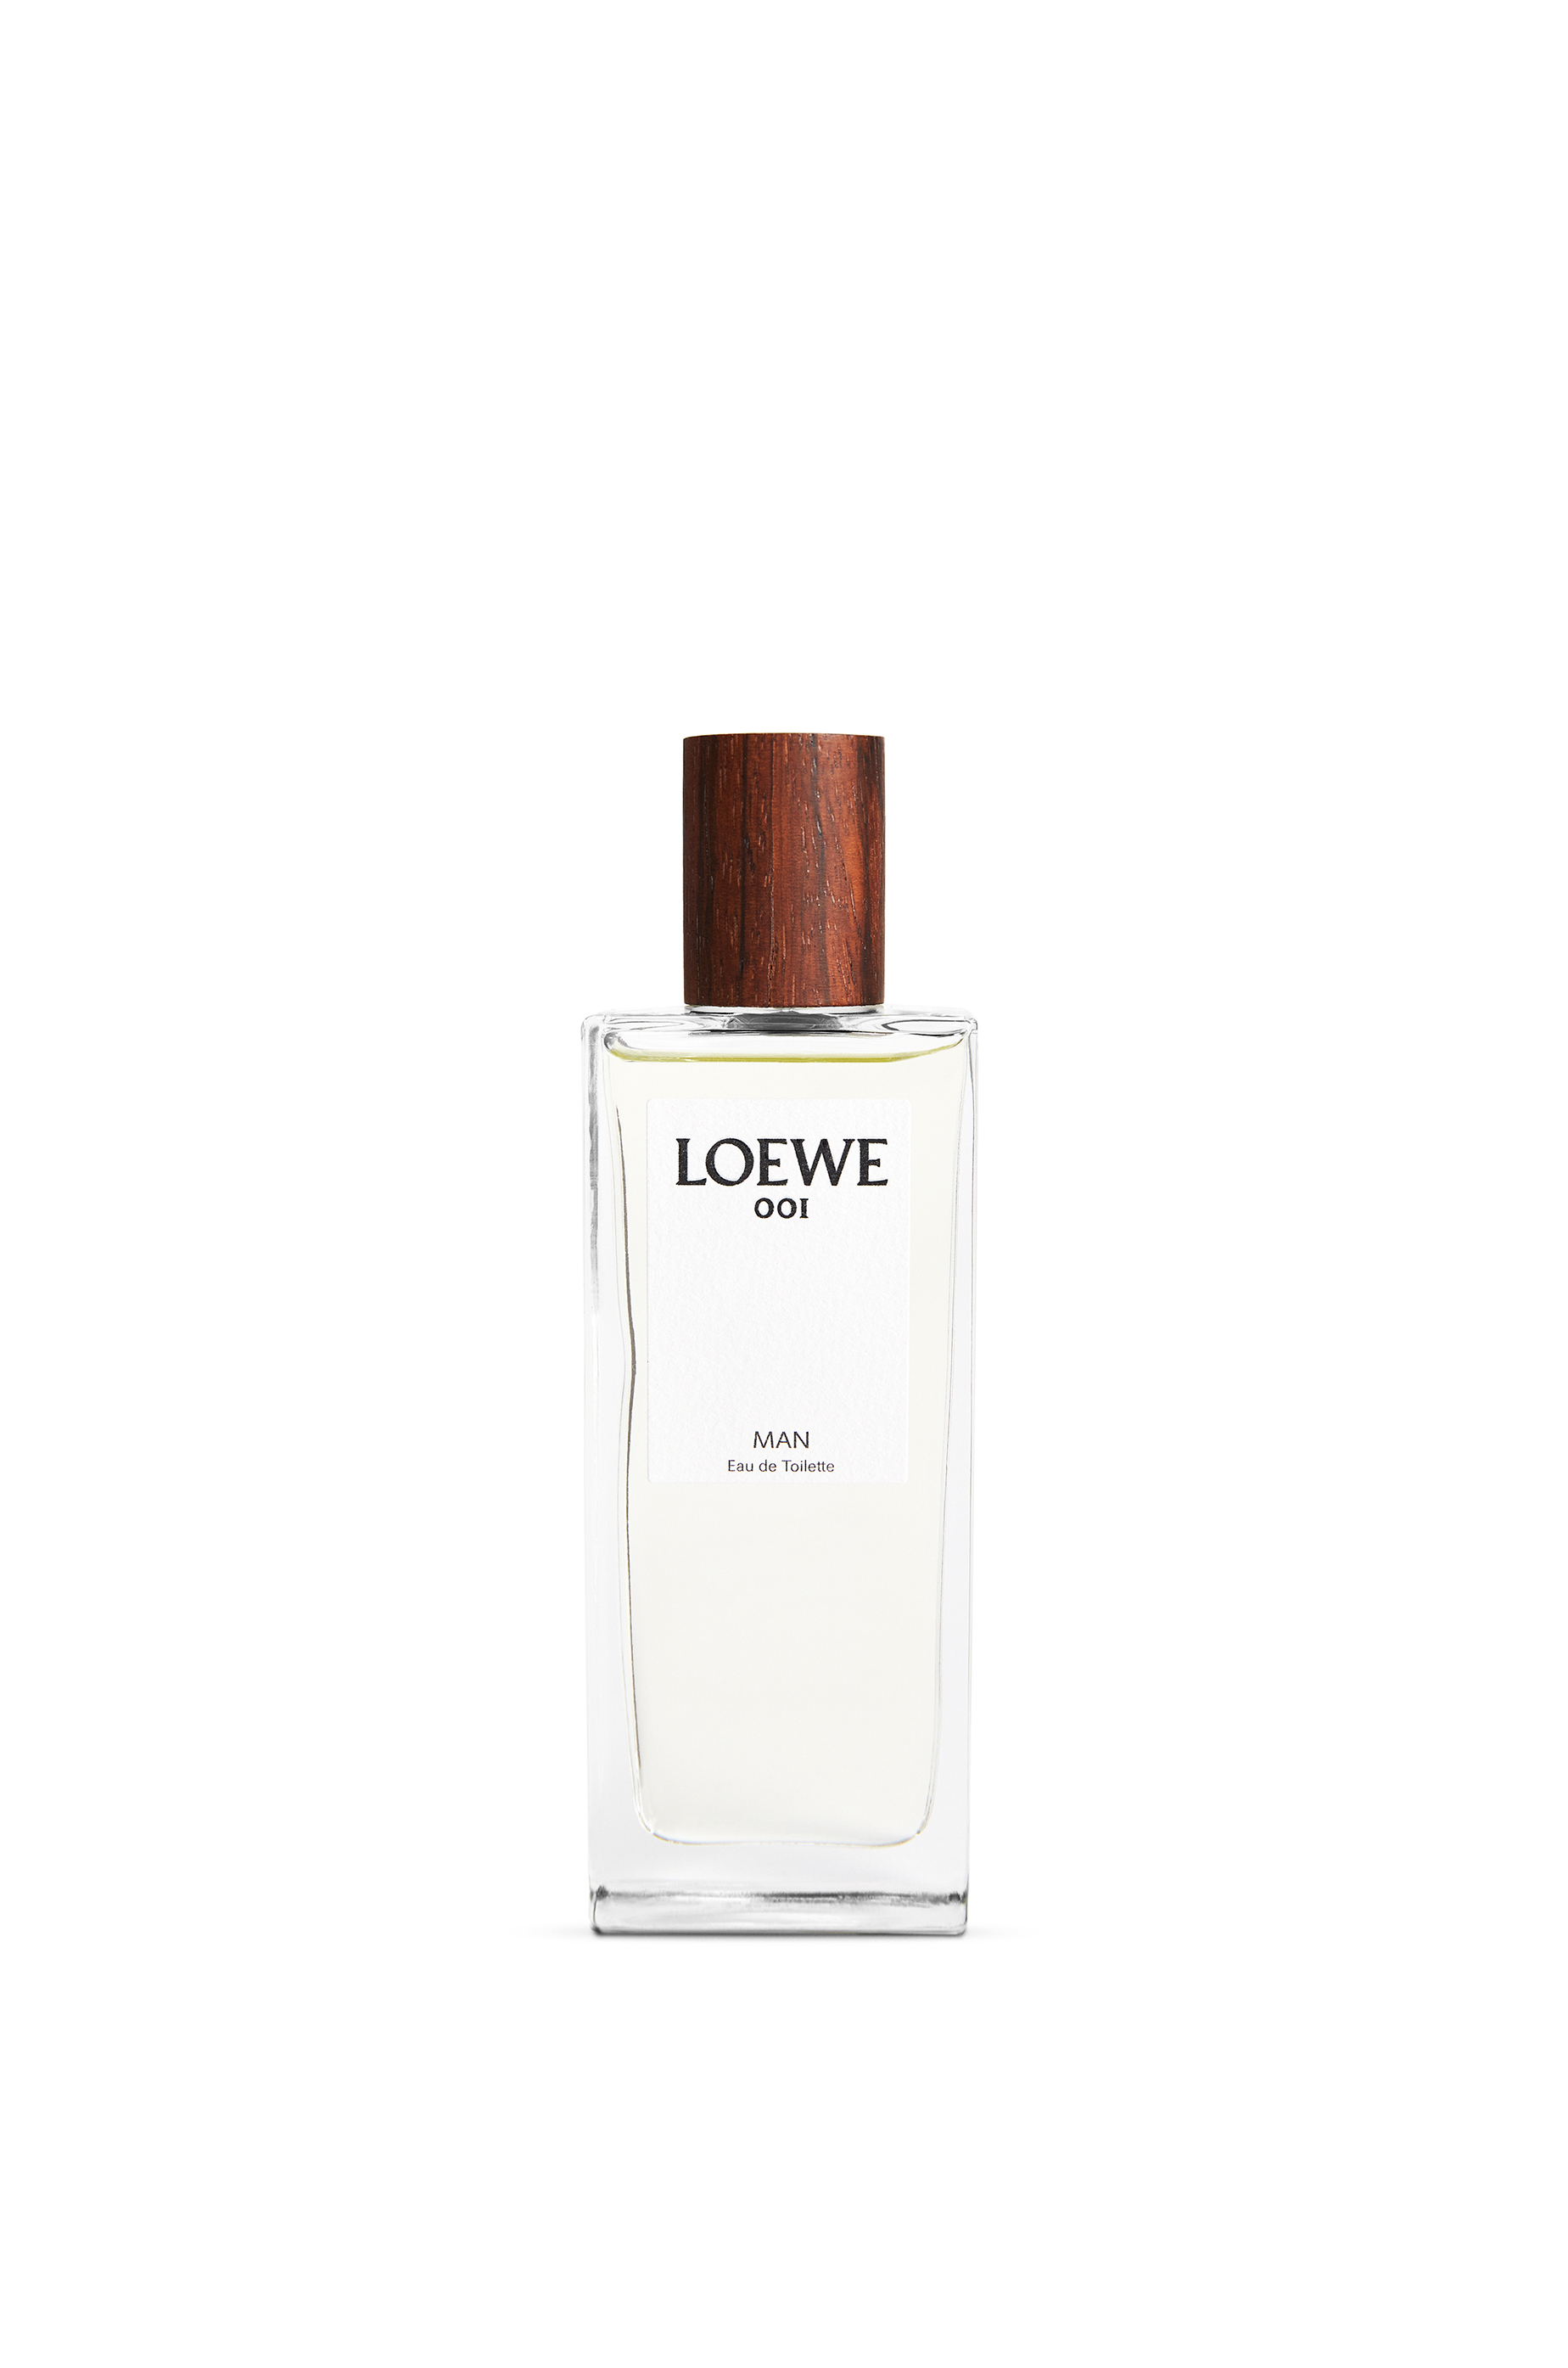 LOEWE 001 男士淡香水50ml - LOEWE